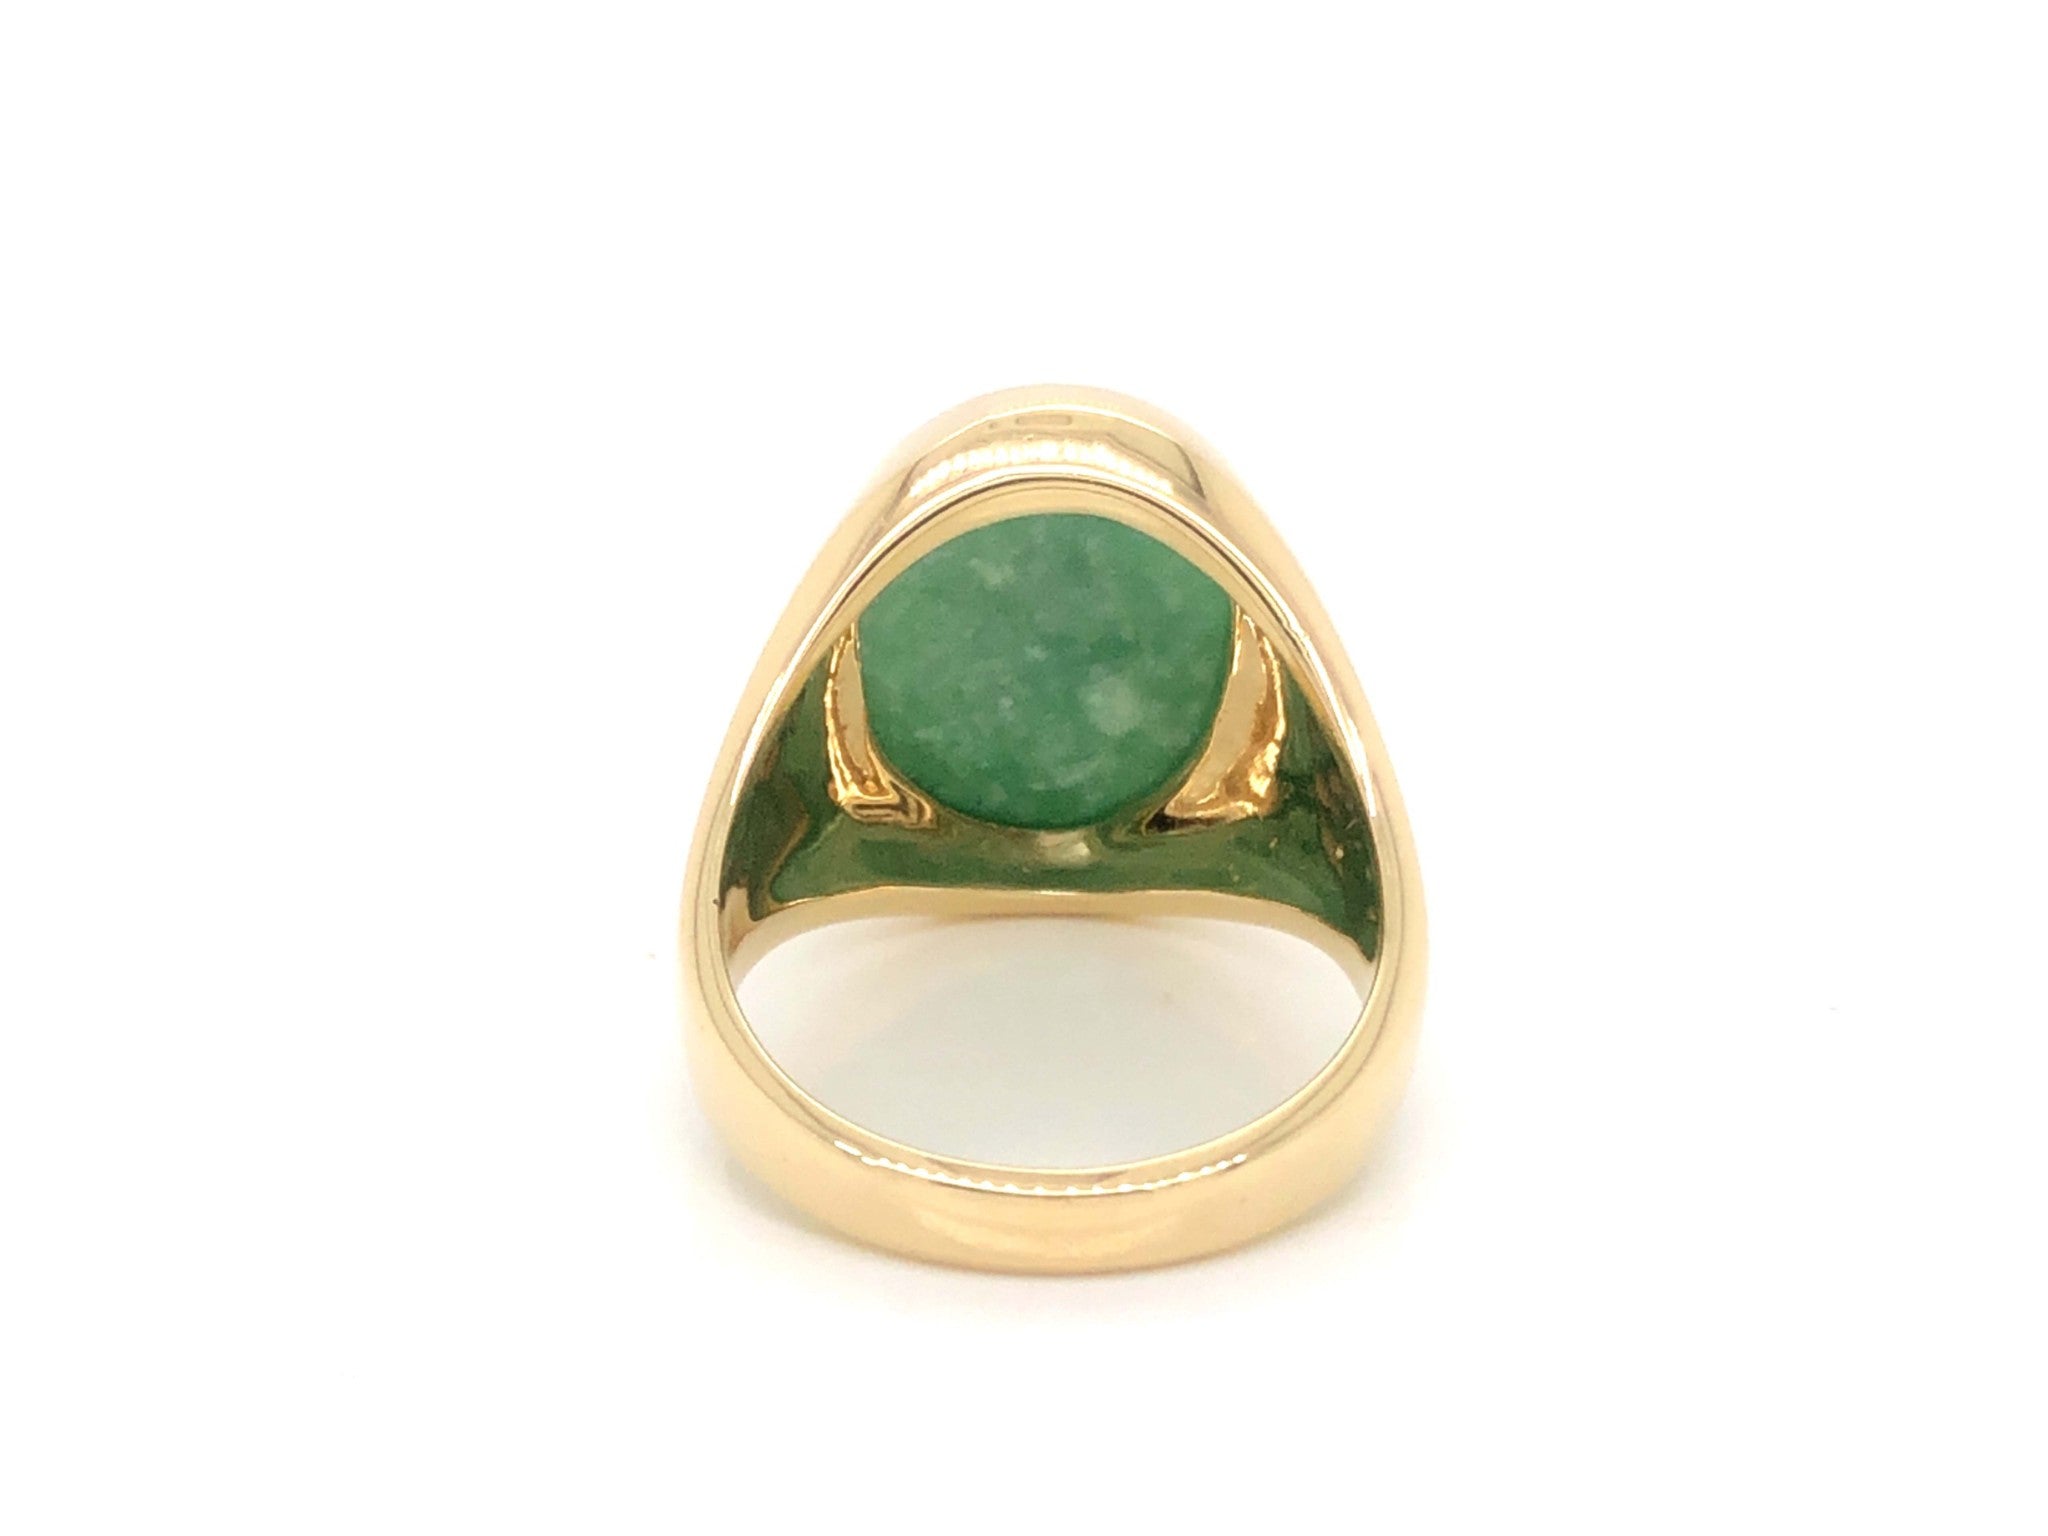 Vintage Large Men's Oval Pale Mottled Green Jade Ring - 14k Yellow Gold